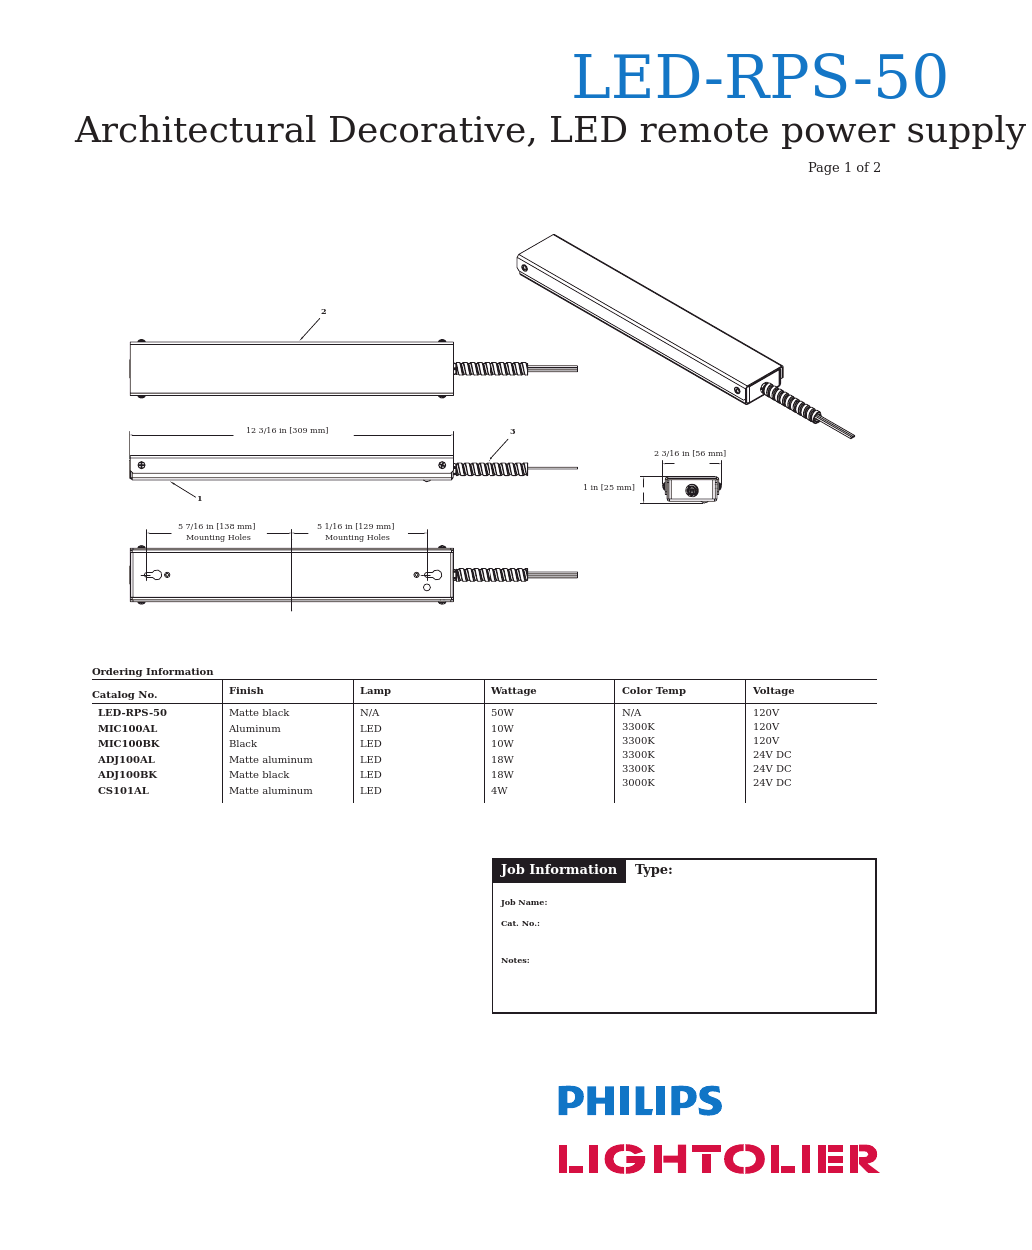 Architectural Decorative LED-RPS-50